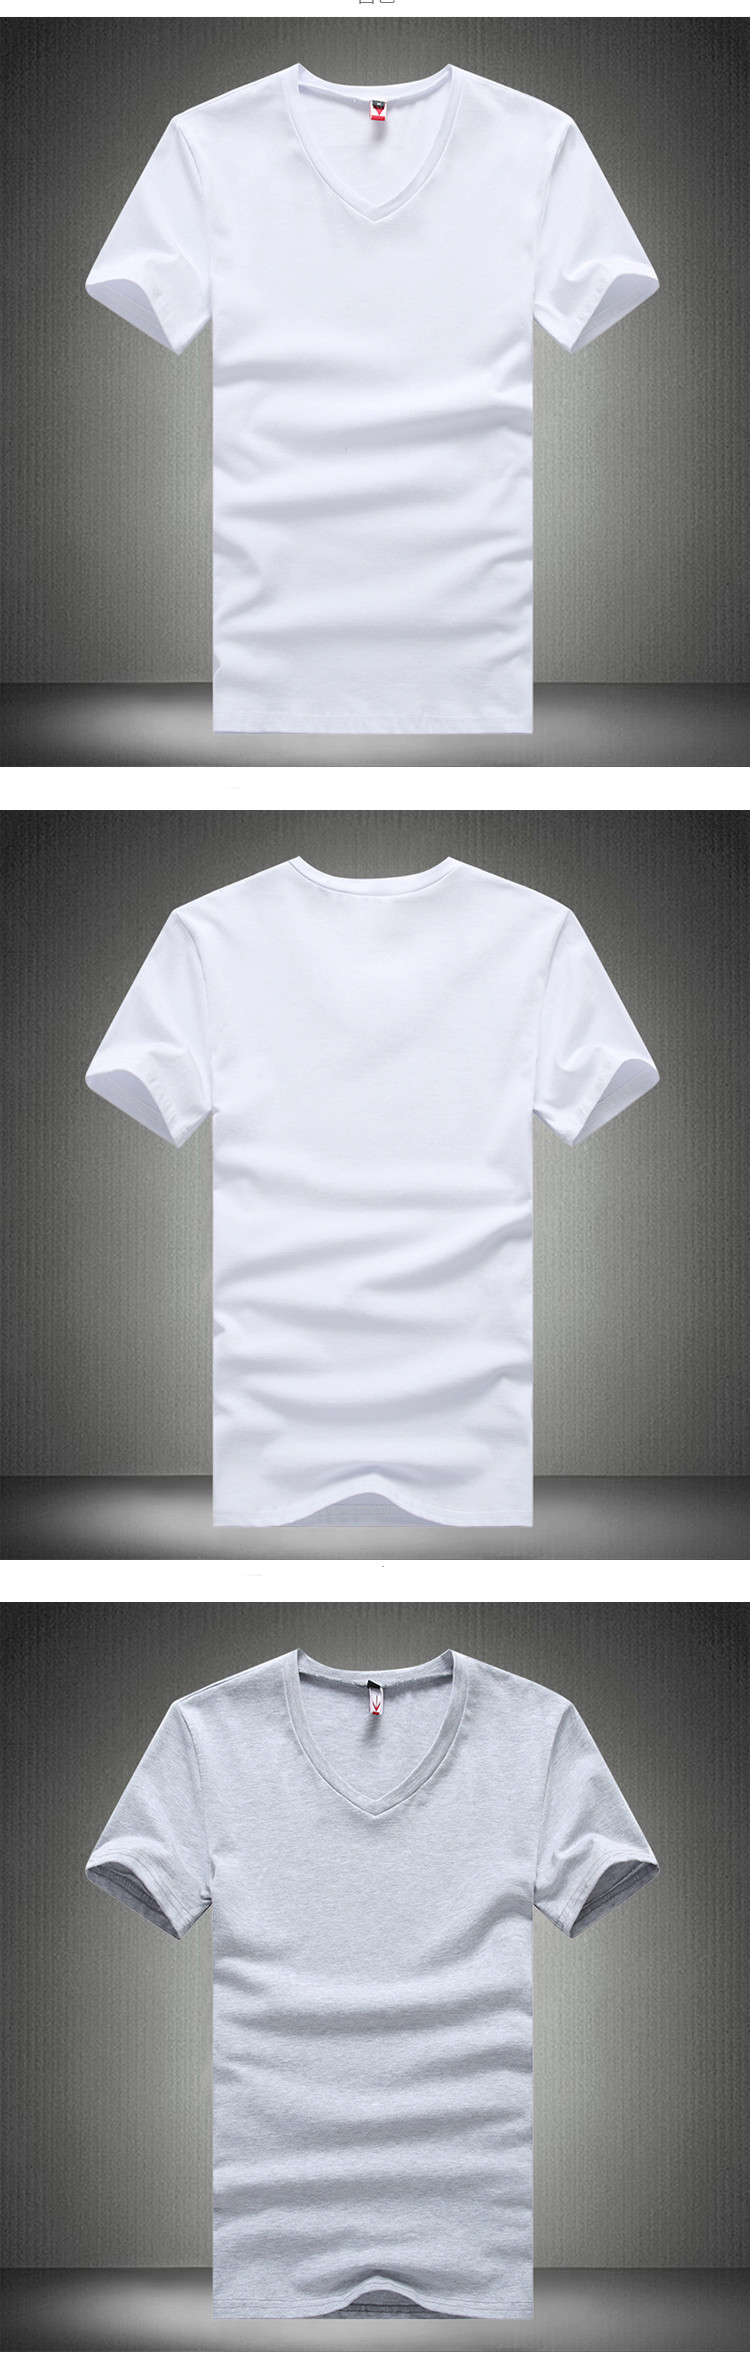 Large-size-men39s-short-sleeved-T-shirt-Summer-new-solid-color-Slim-casual-v-neck-T-shirt-2017-simpl-32638833103